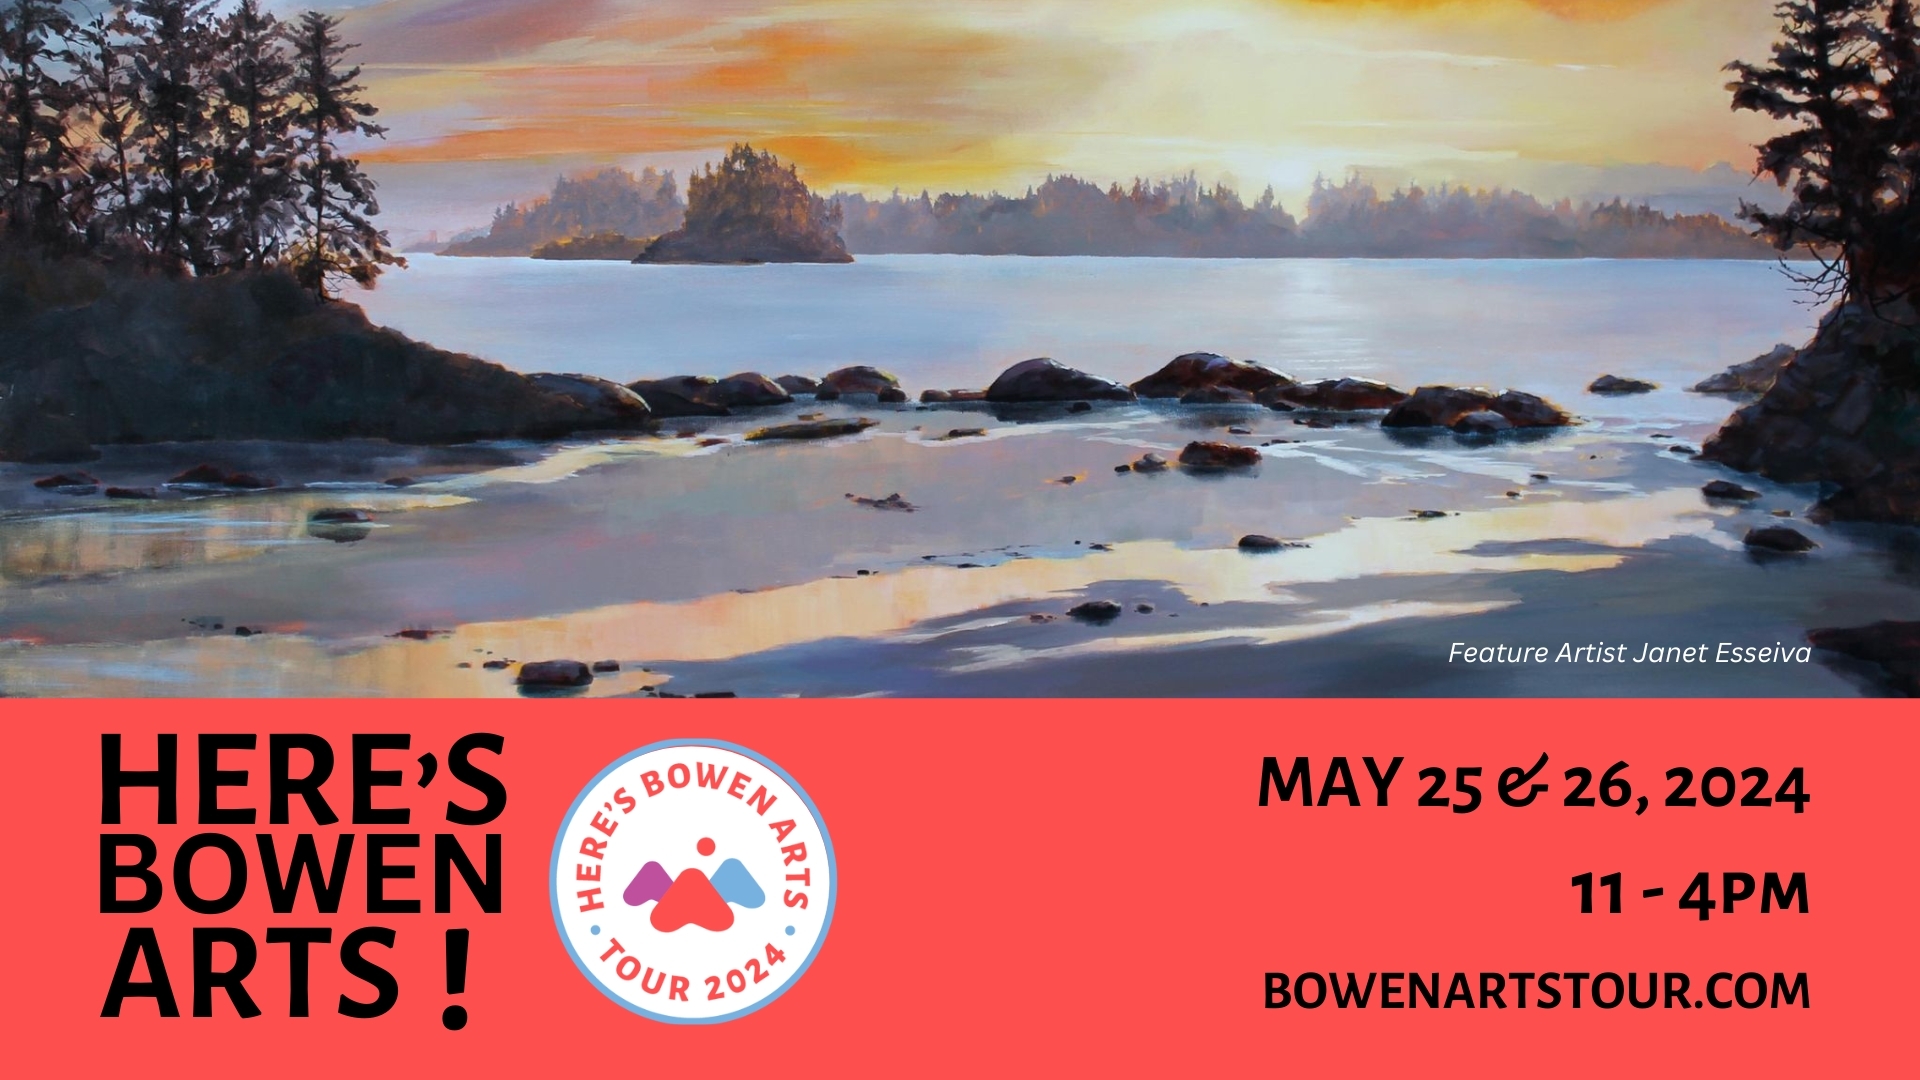 Here's Bowen Arts! Tour 2024 May 25 and 26 11-4 Free.130 artists,21 venues Bowen Is. bowenartstour.com, Bowen Island, British Columbia, Canada